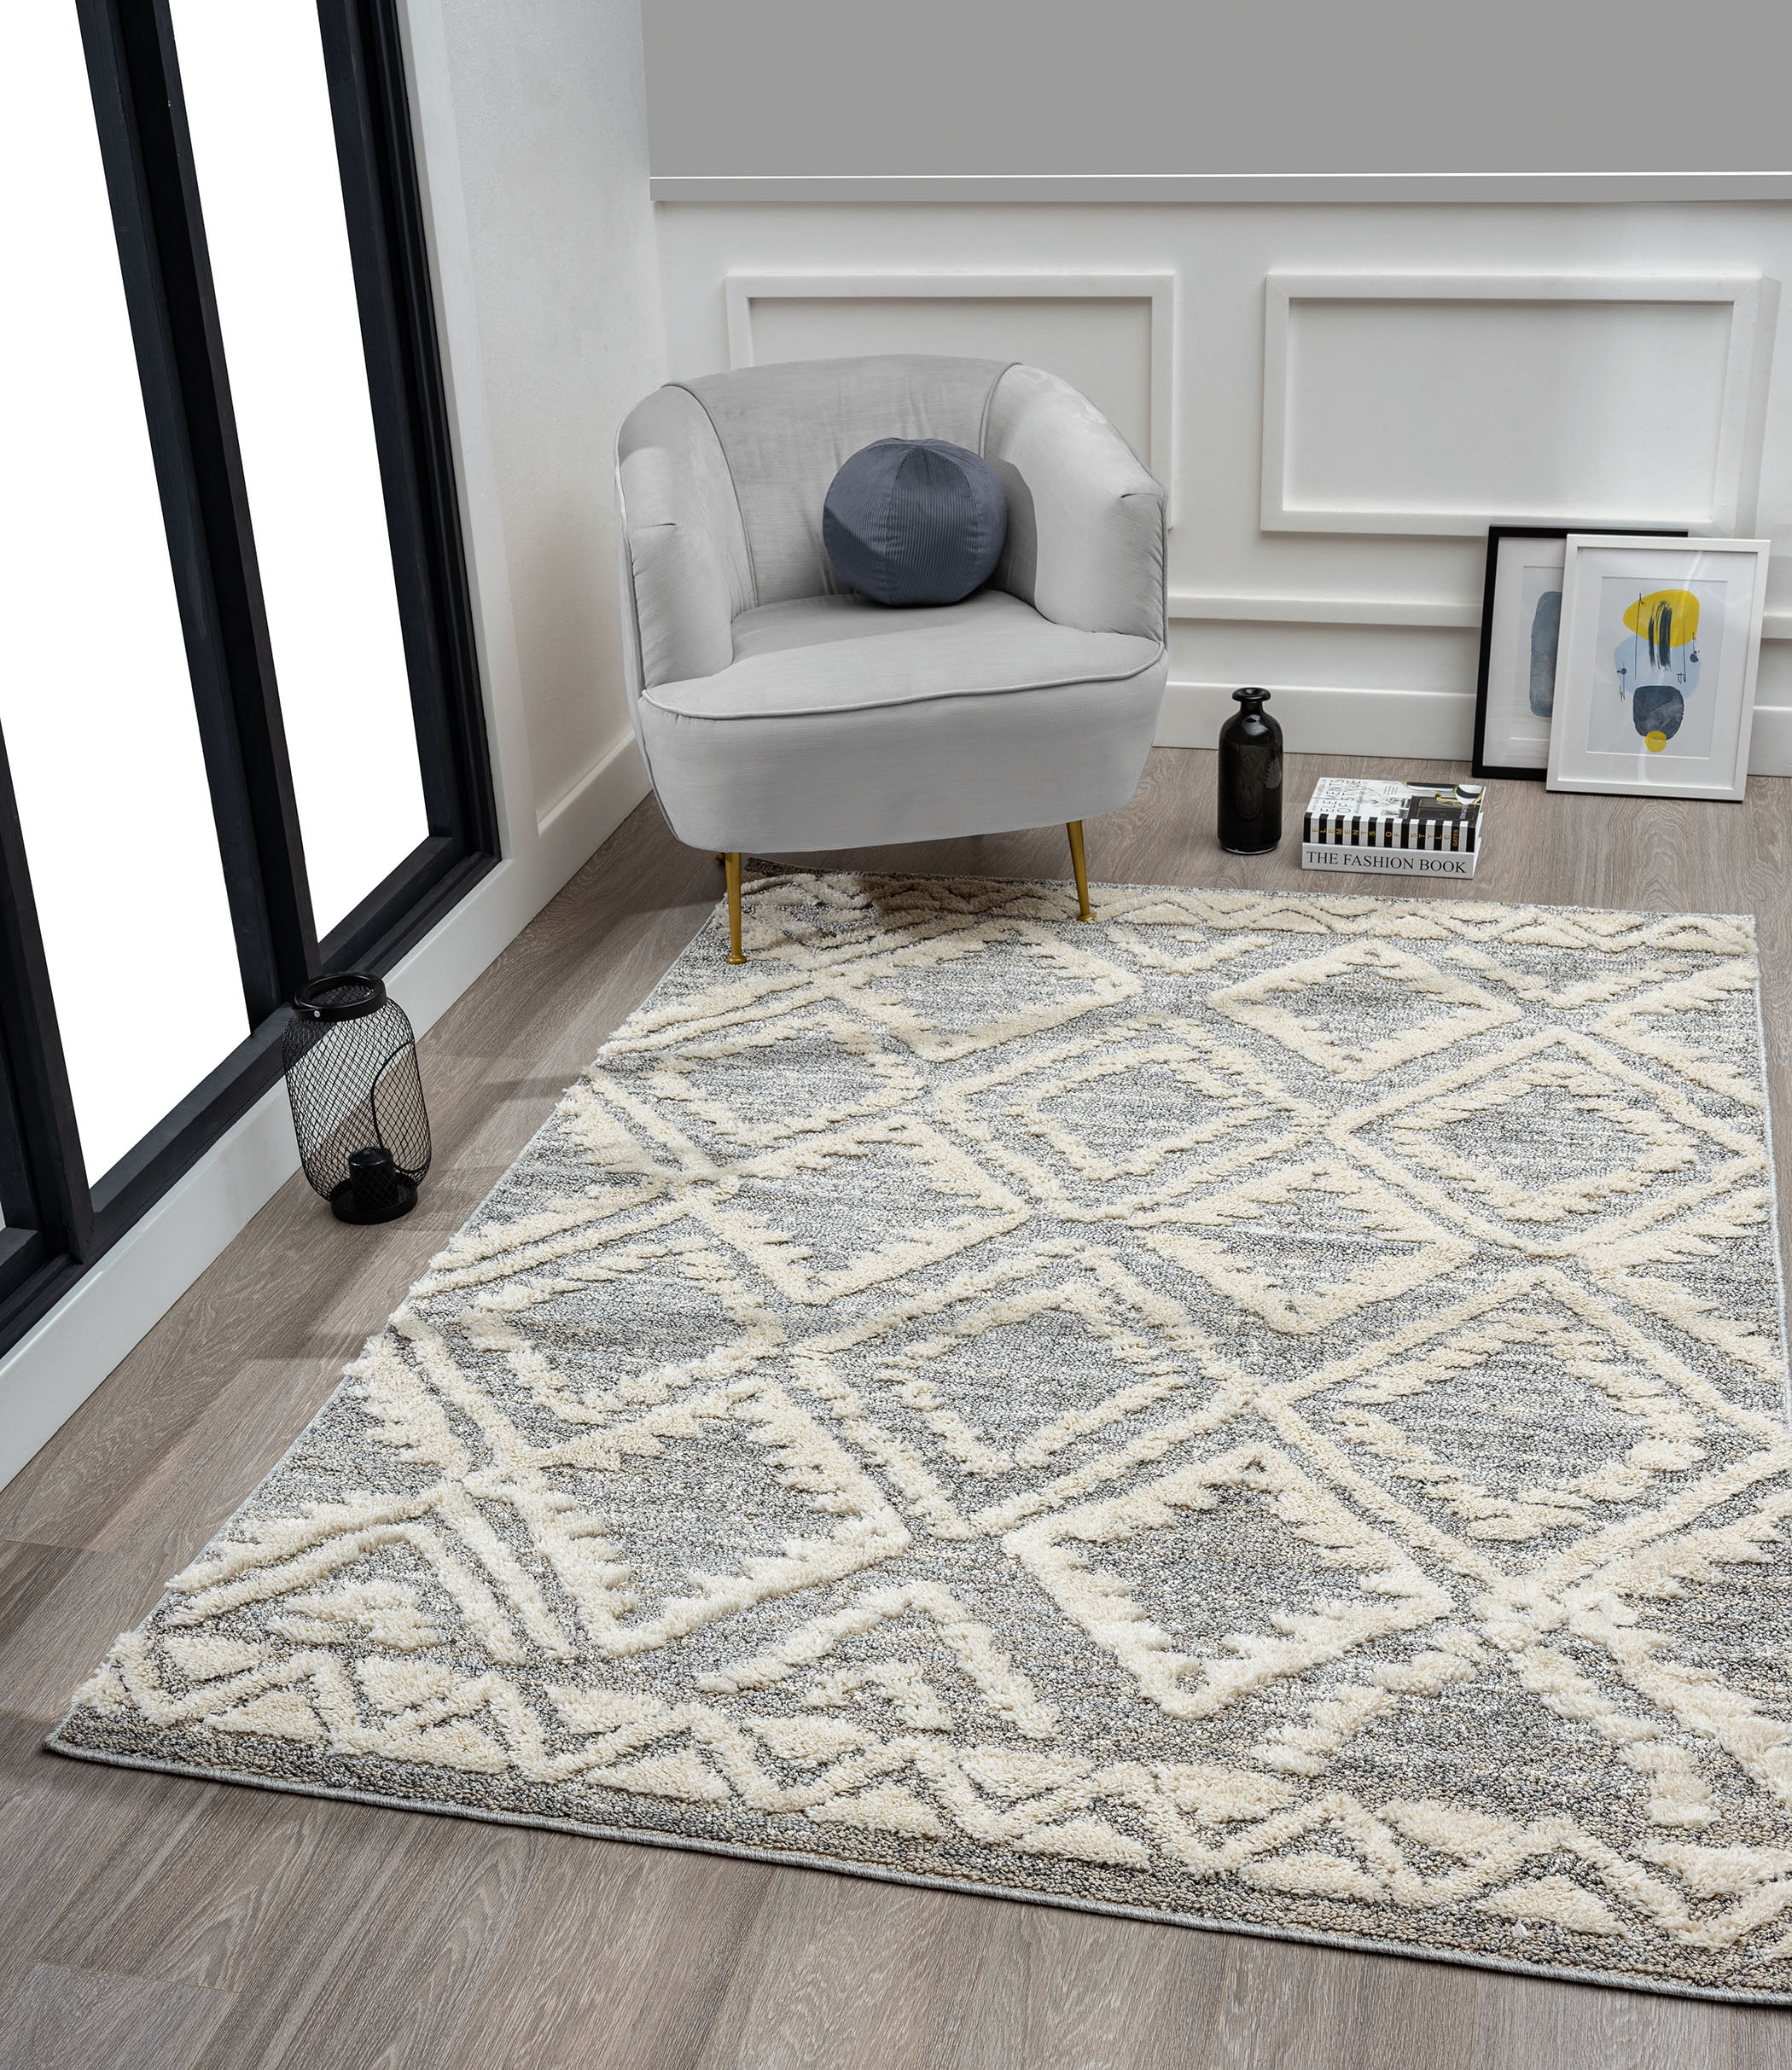 Details about   Living Room Vintage Rugs Cream Beige Bedroom Rug Geometric 3D Effect Floor Mat 